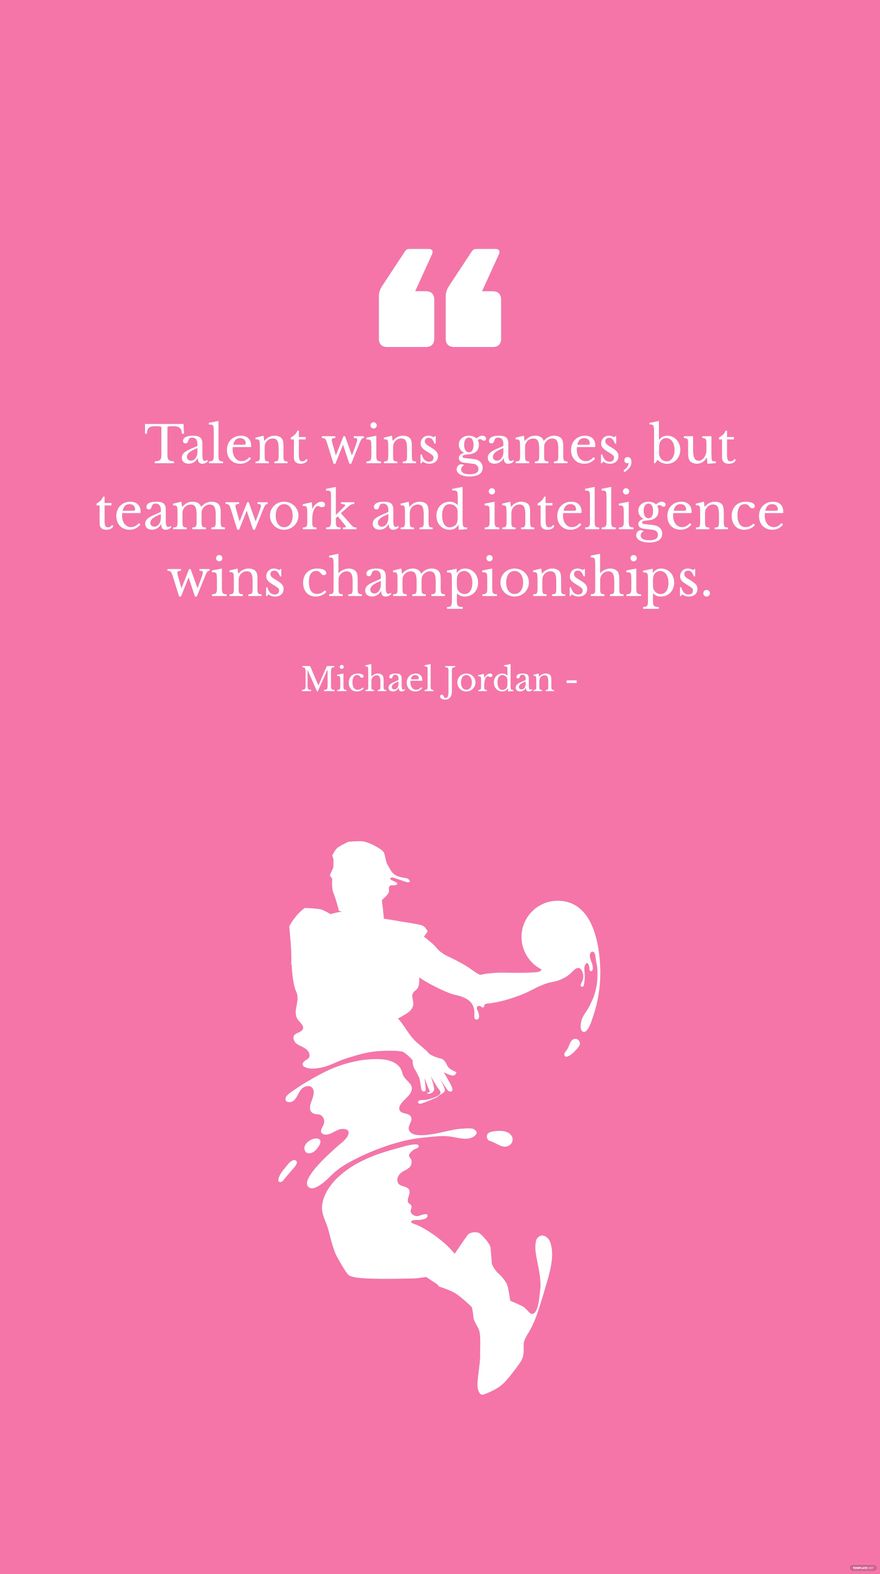 Michael Jordan - Talent wins games, but teamwork and intelligence wins championships.